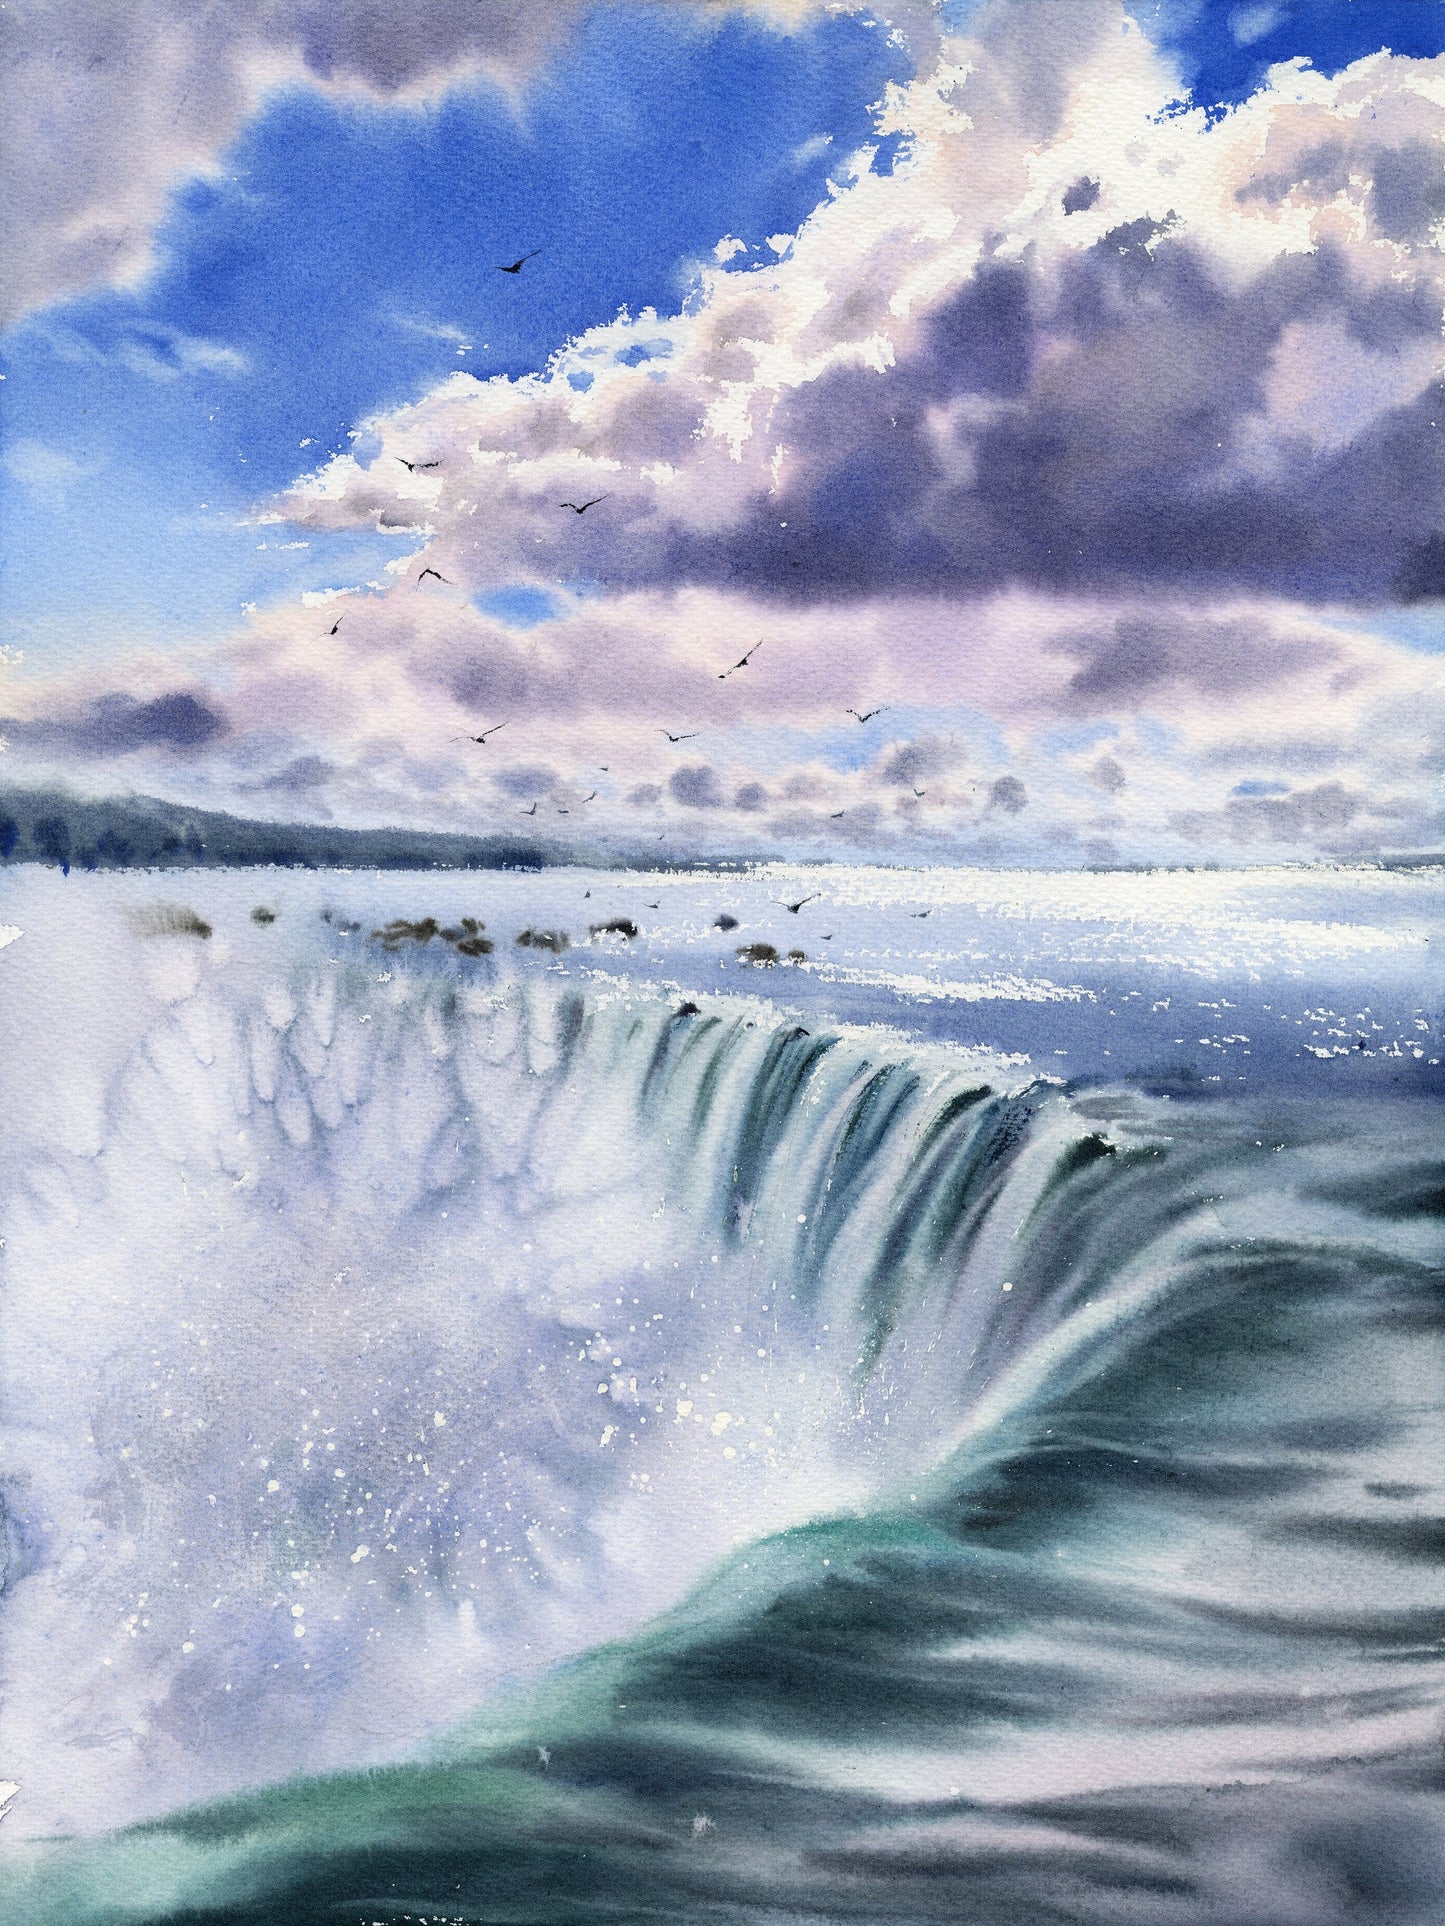 Niagara Falls Art Print, American Falls Watercolor, Travel Poster, Waterfall Painting, Ontario Canada, Office Wall Decor